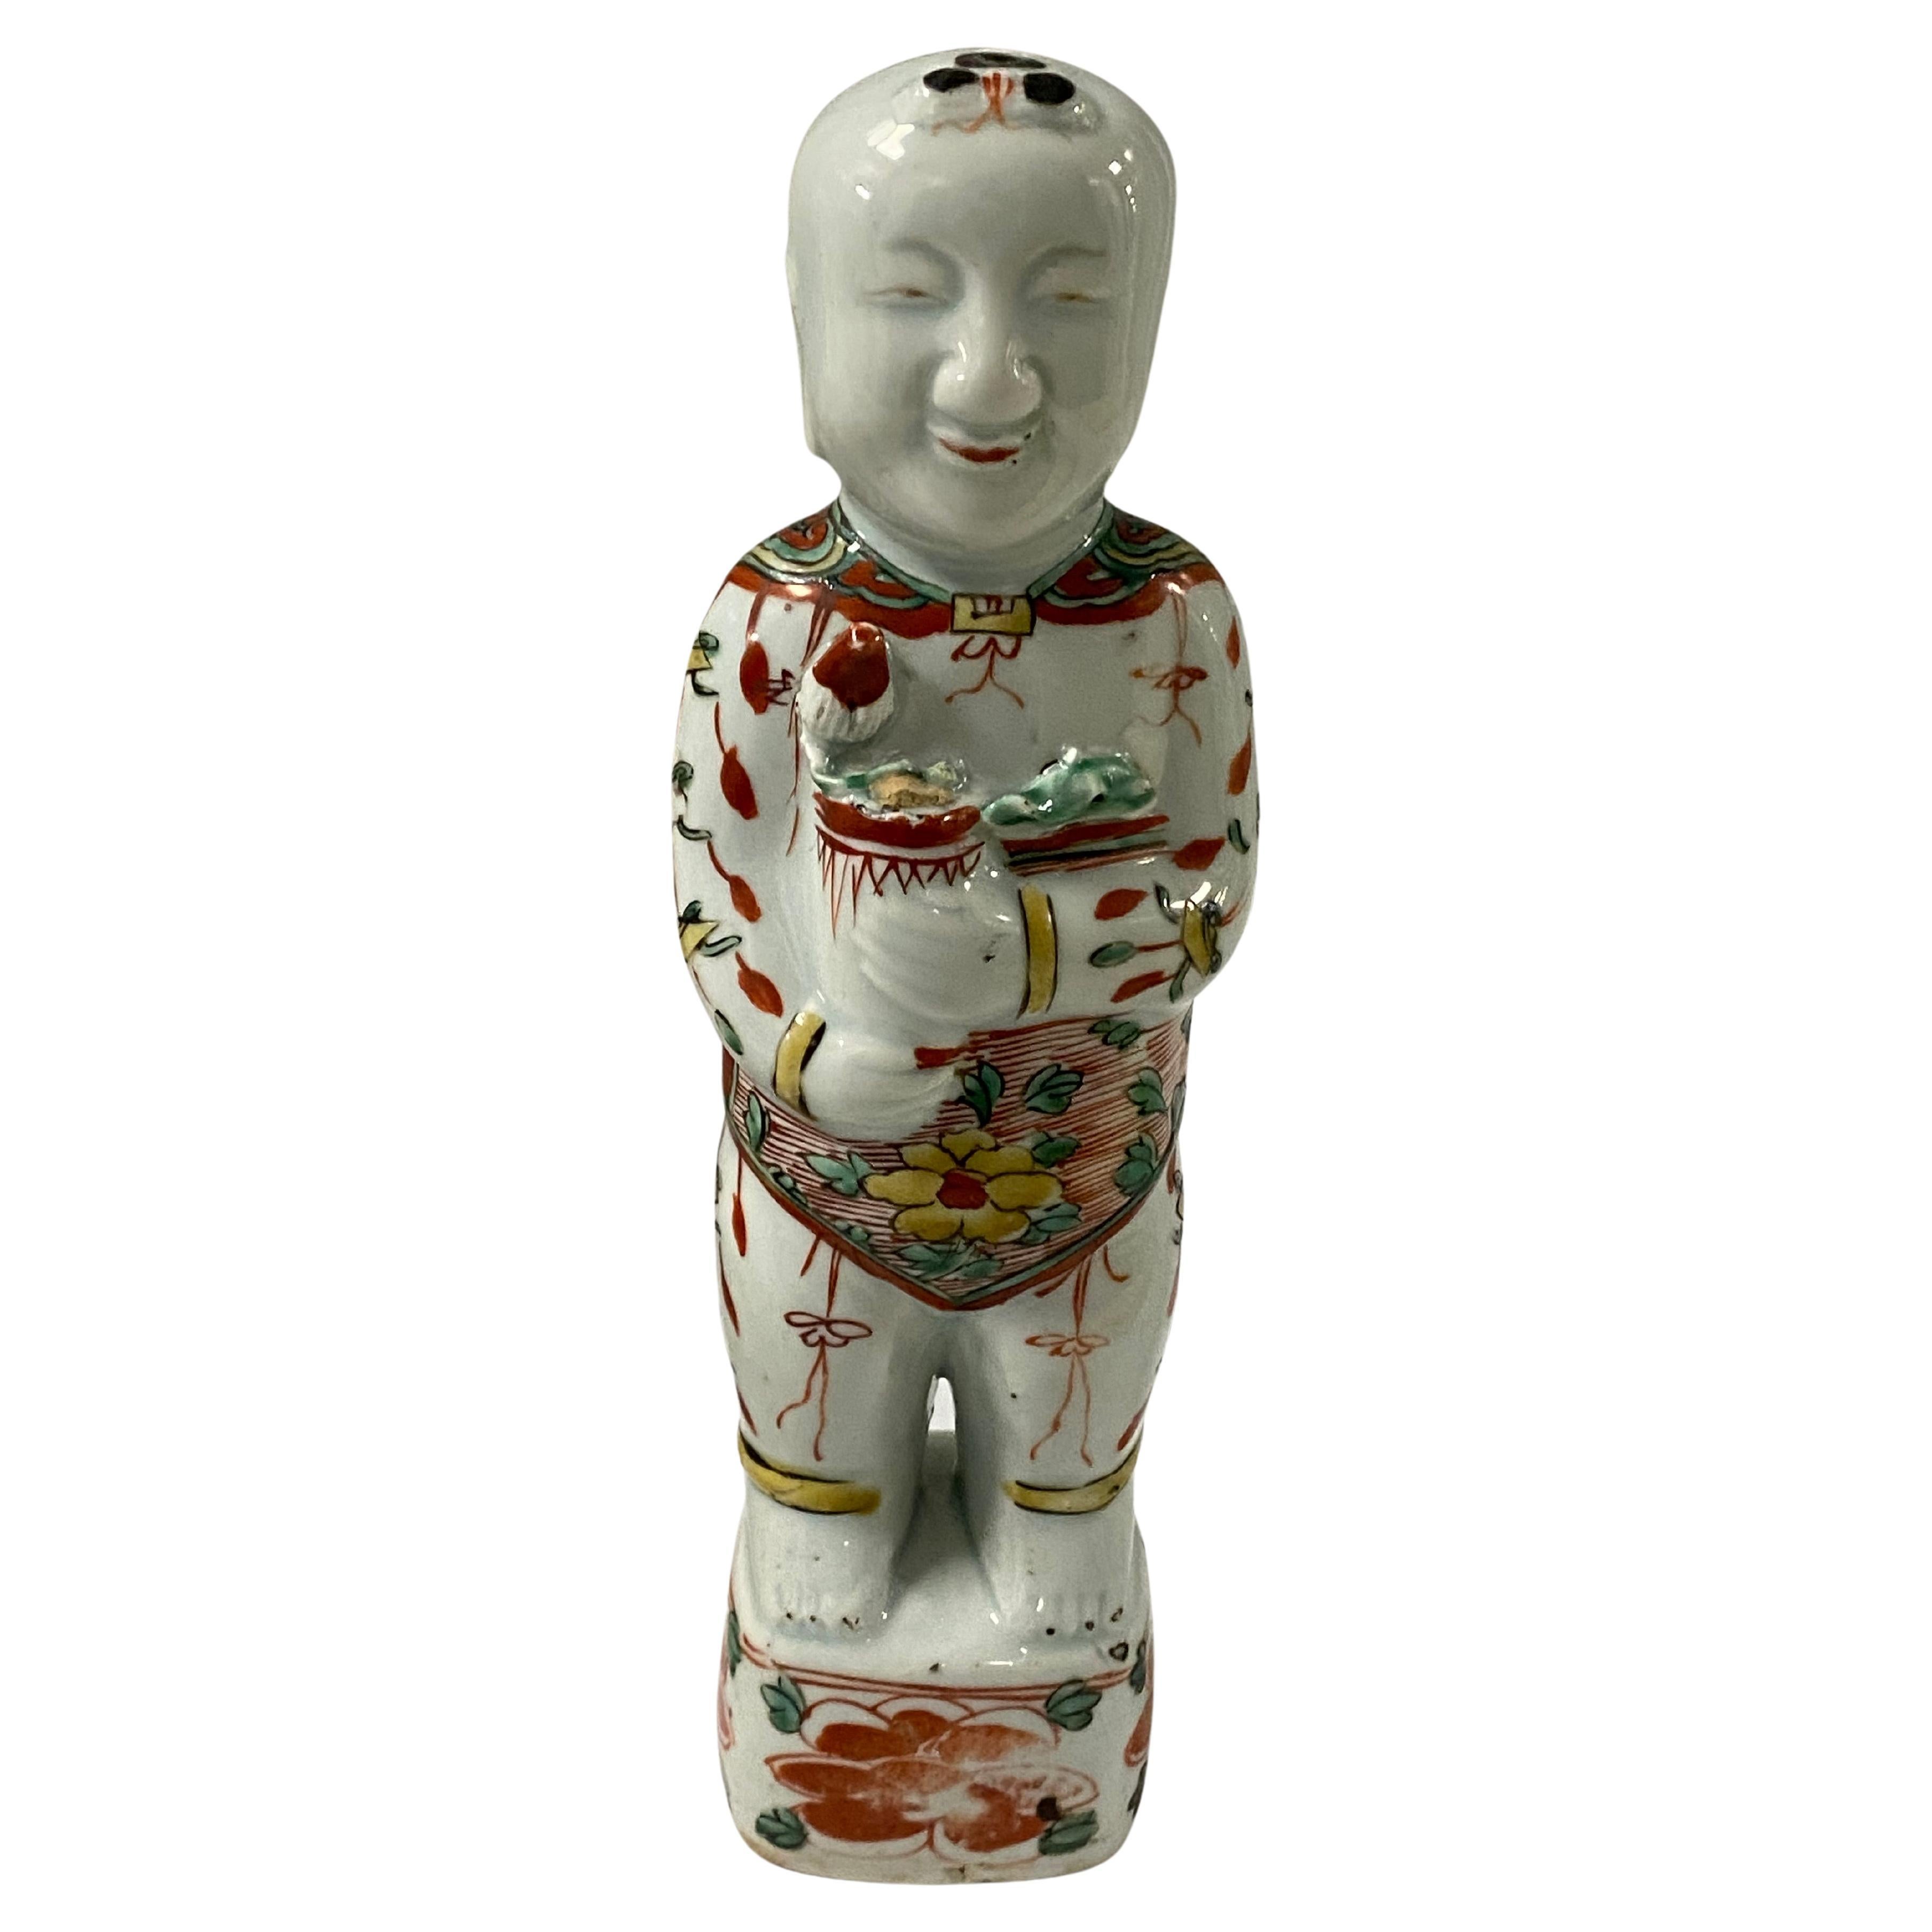 17th Century Chinese Porcelain Ho Ho Boy Figure in Wucai/Famille Vert Glaze